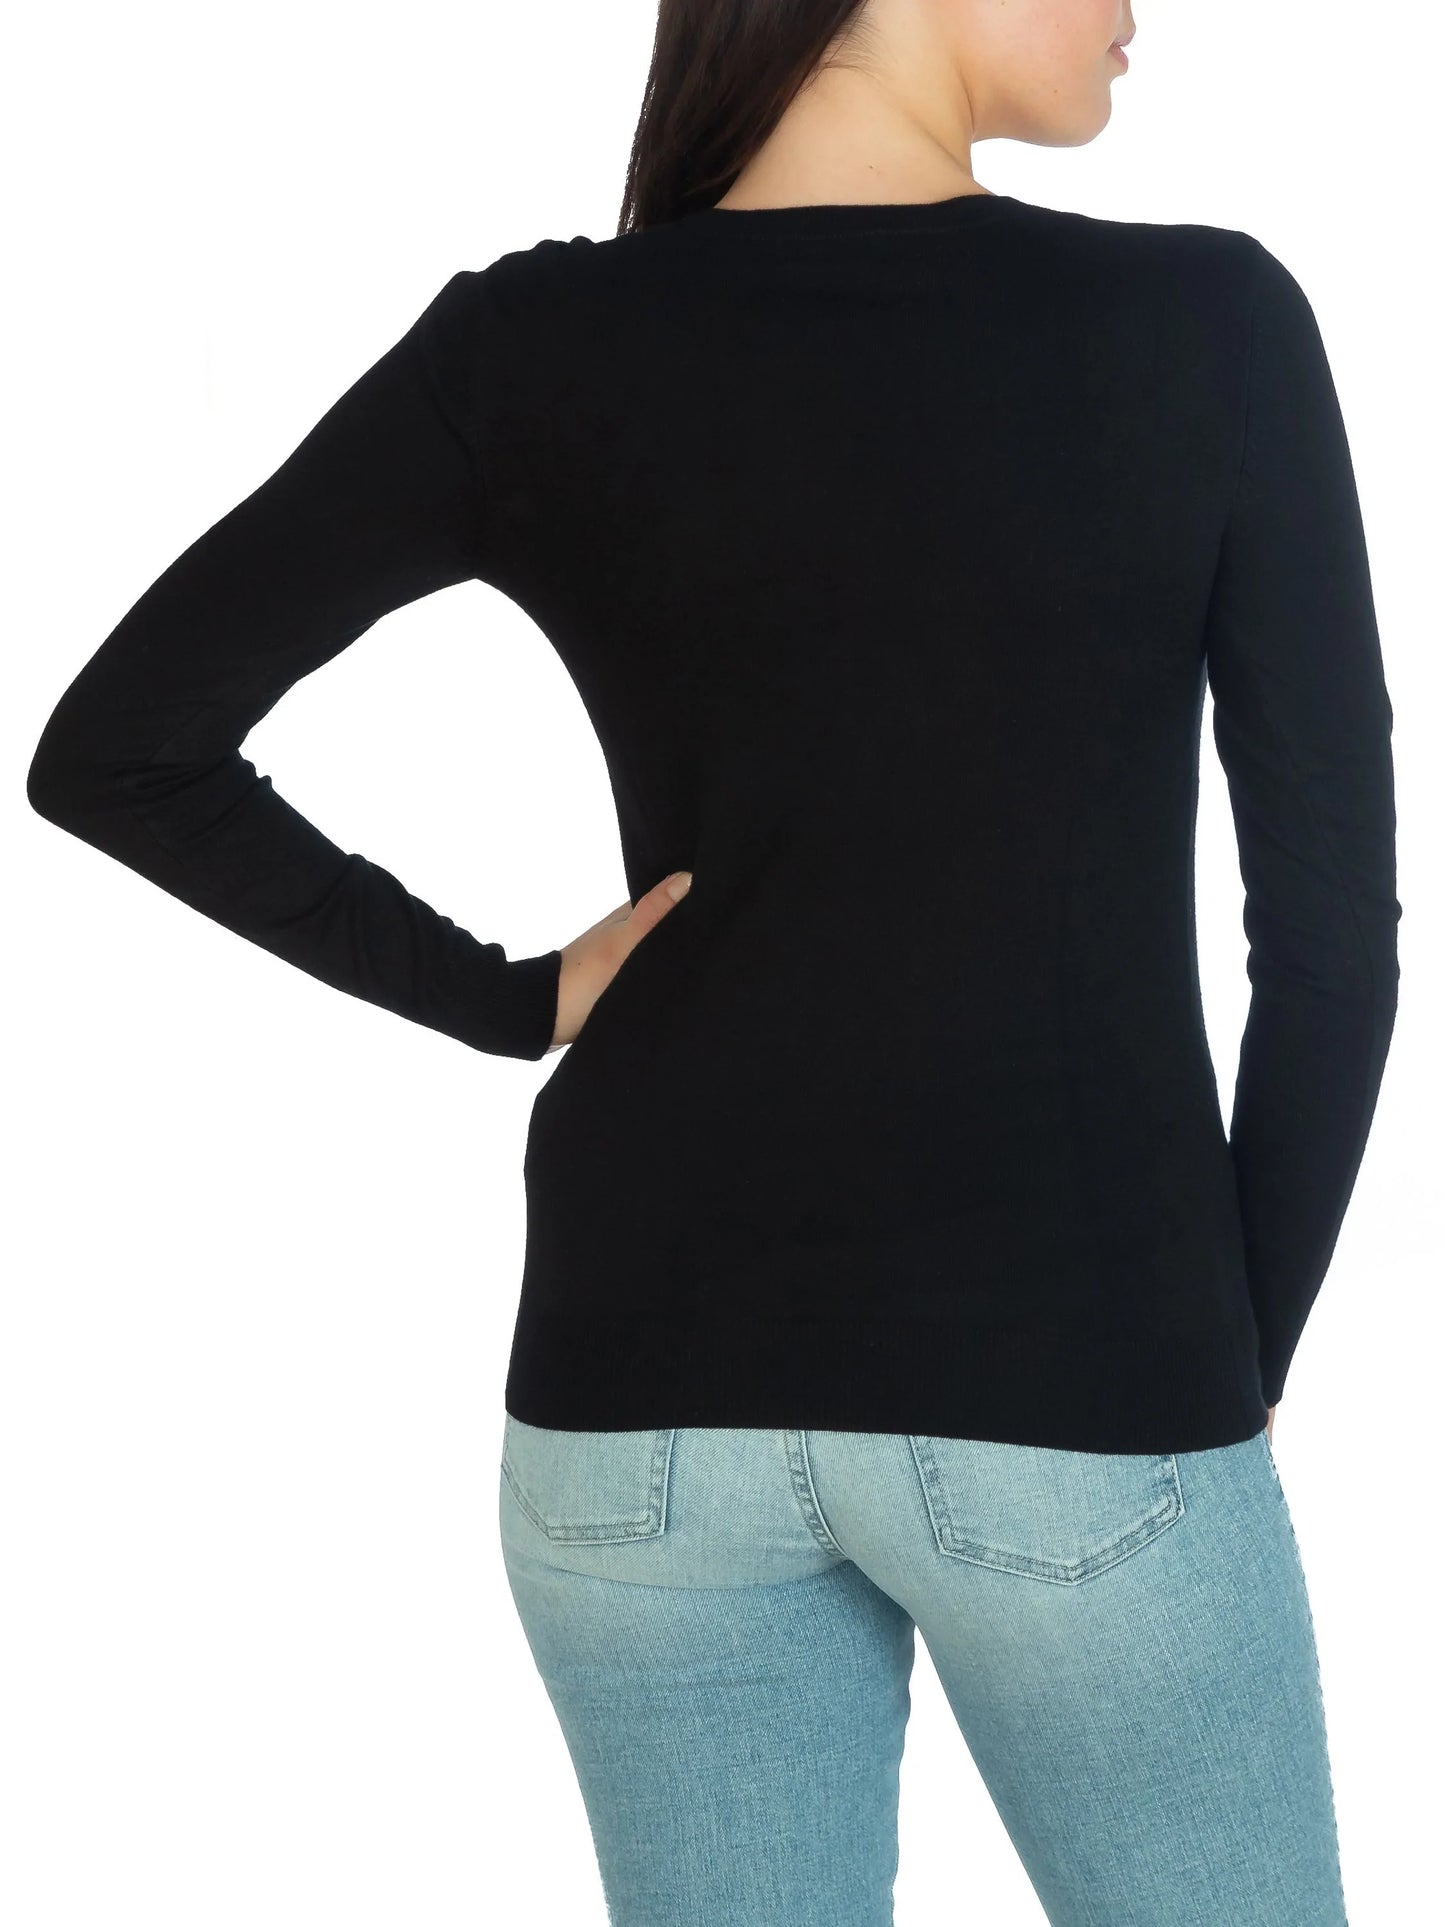 GUESS women's black knit top